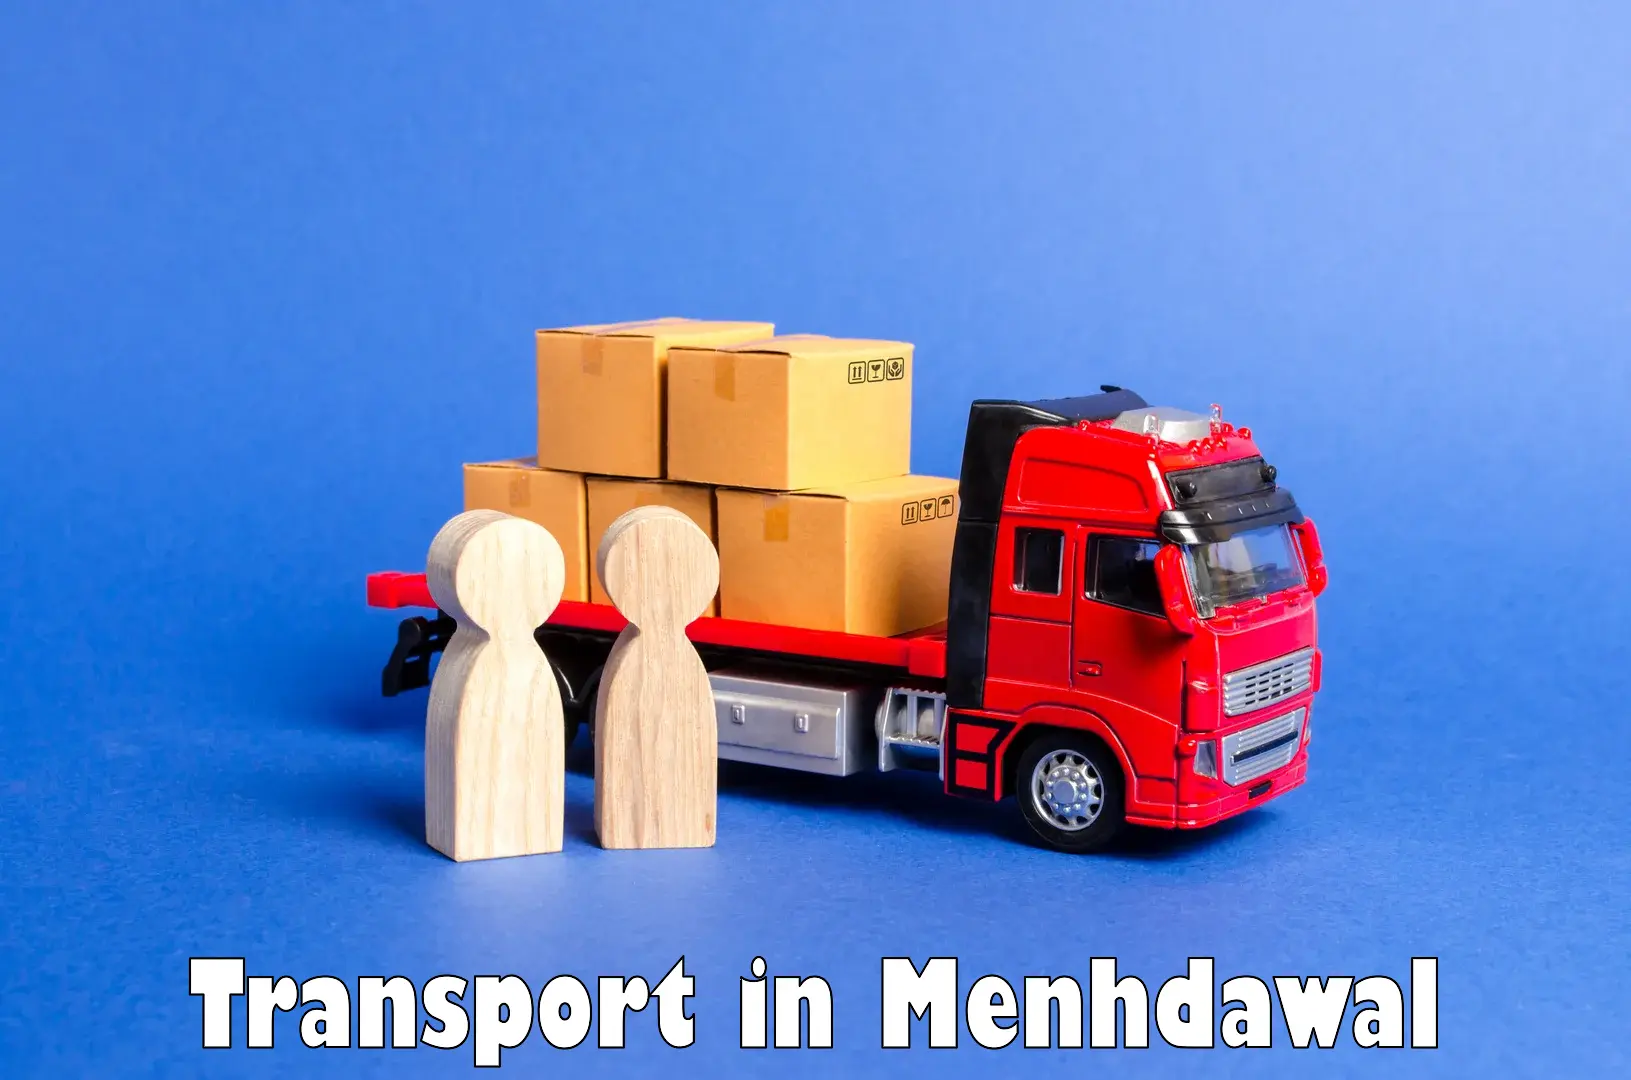 Intercity goods transport in Menhdawal